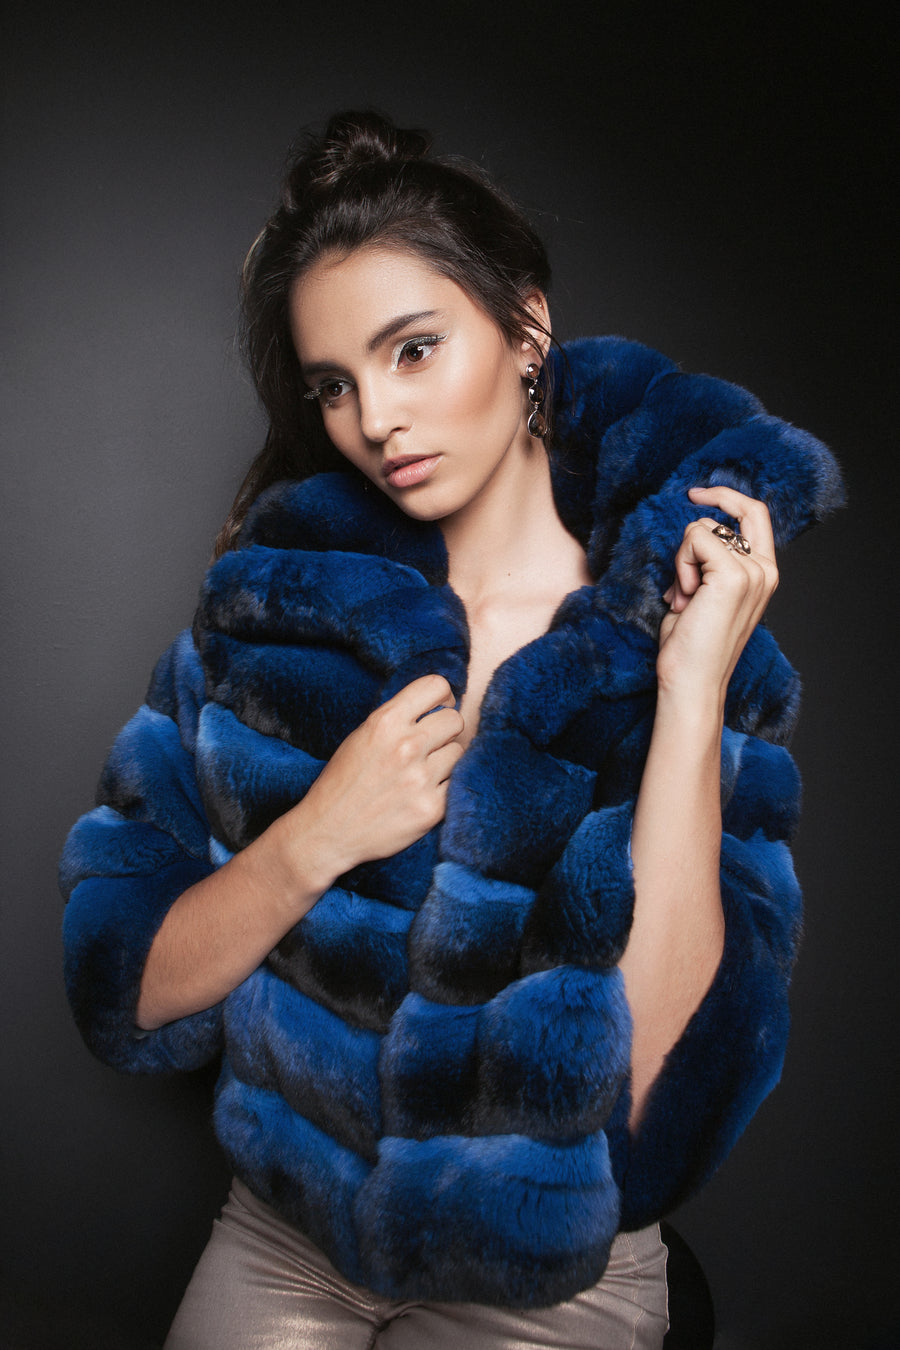 Chinchilla Fur Jacket for Women (Blue)